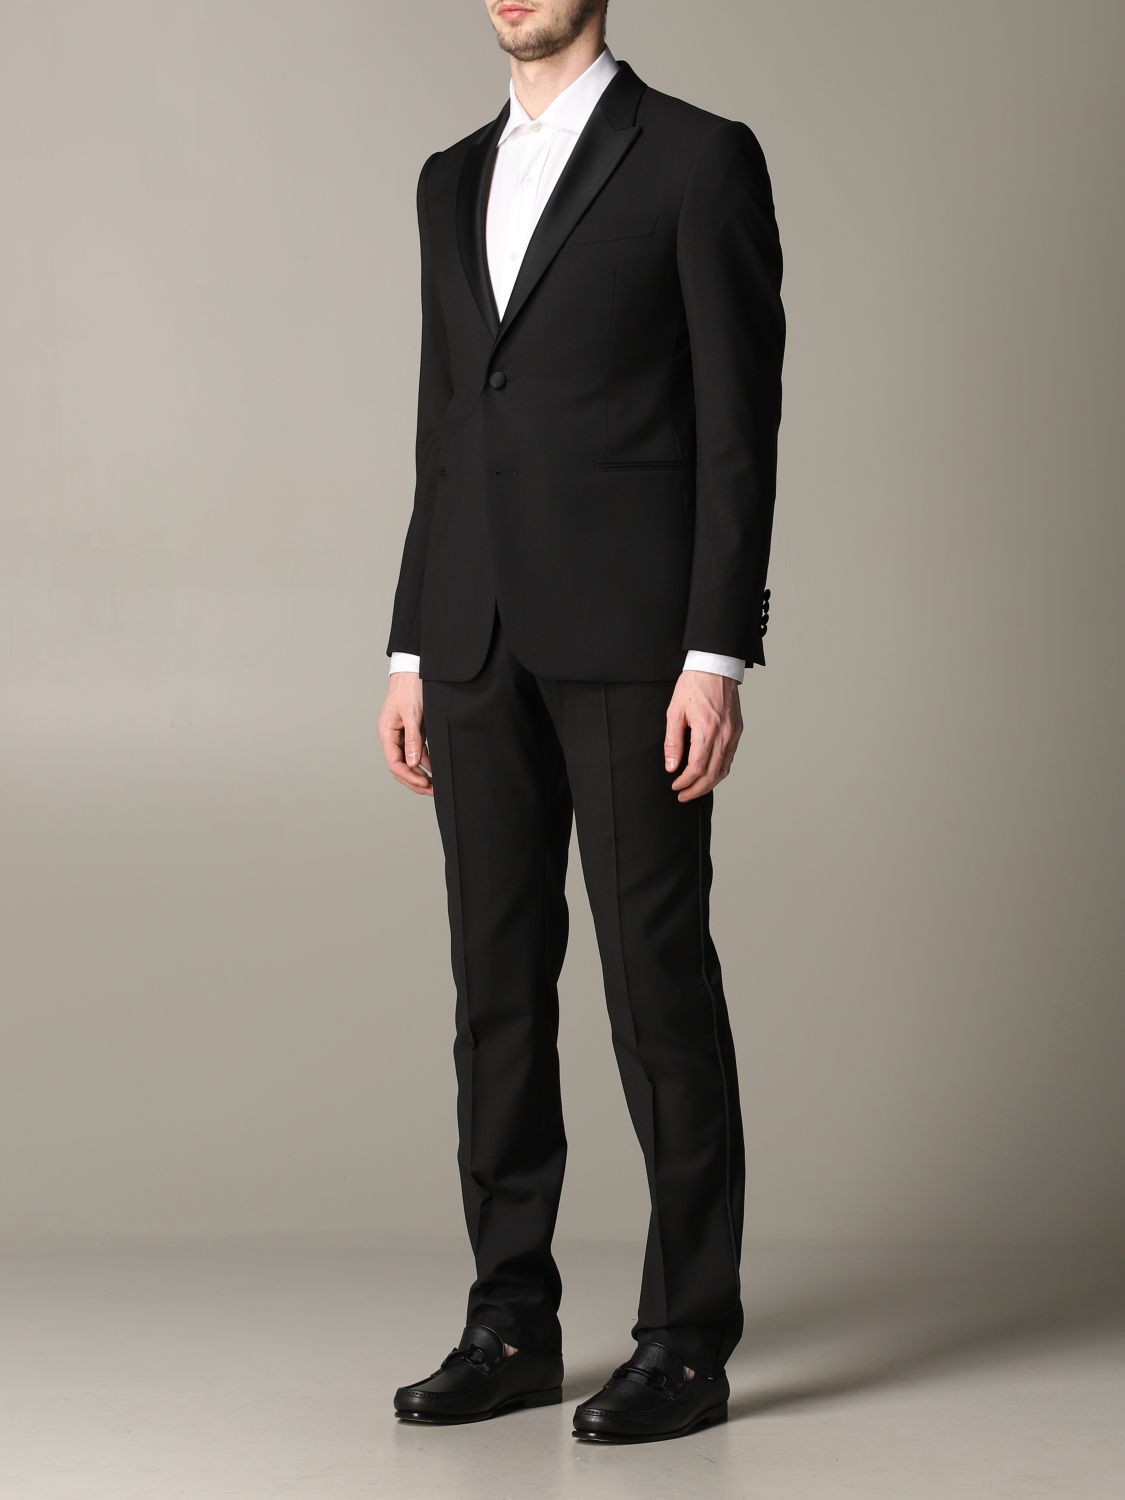 Emporio Armani Outlet: tuxedo suit in wool 220gr drop 7 | Suit Emporio ...